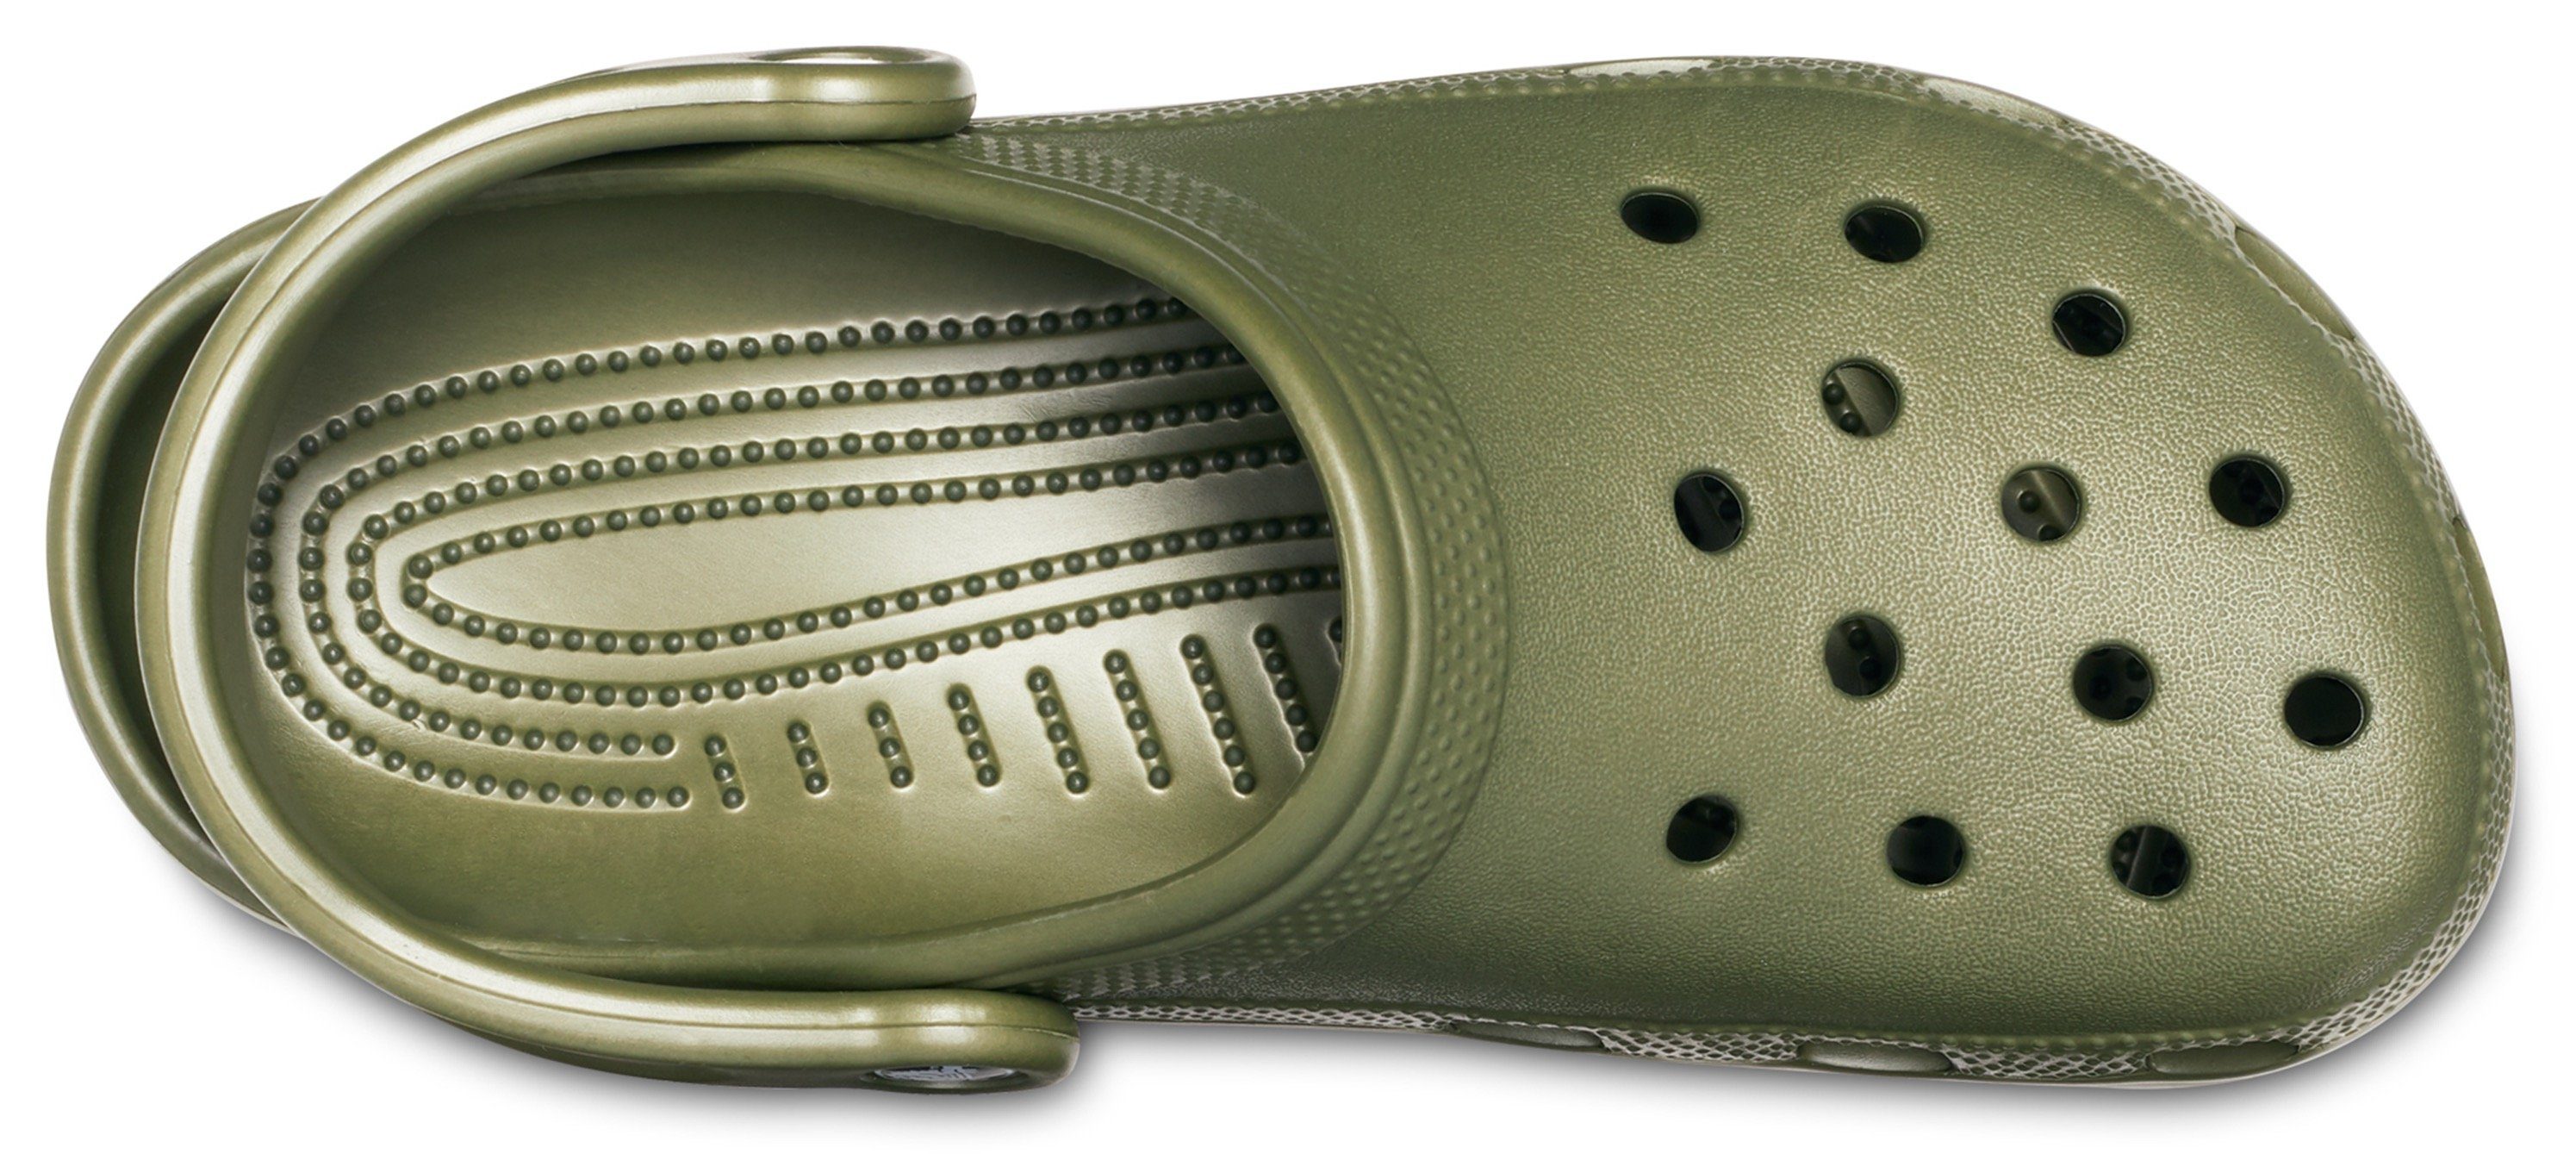 Clog typischem mit Classic khaki Crocs Logo